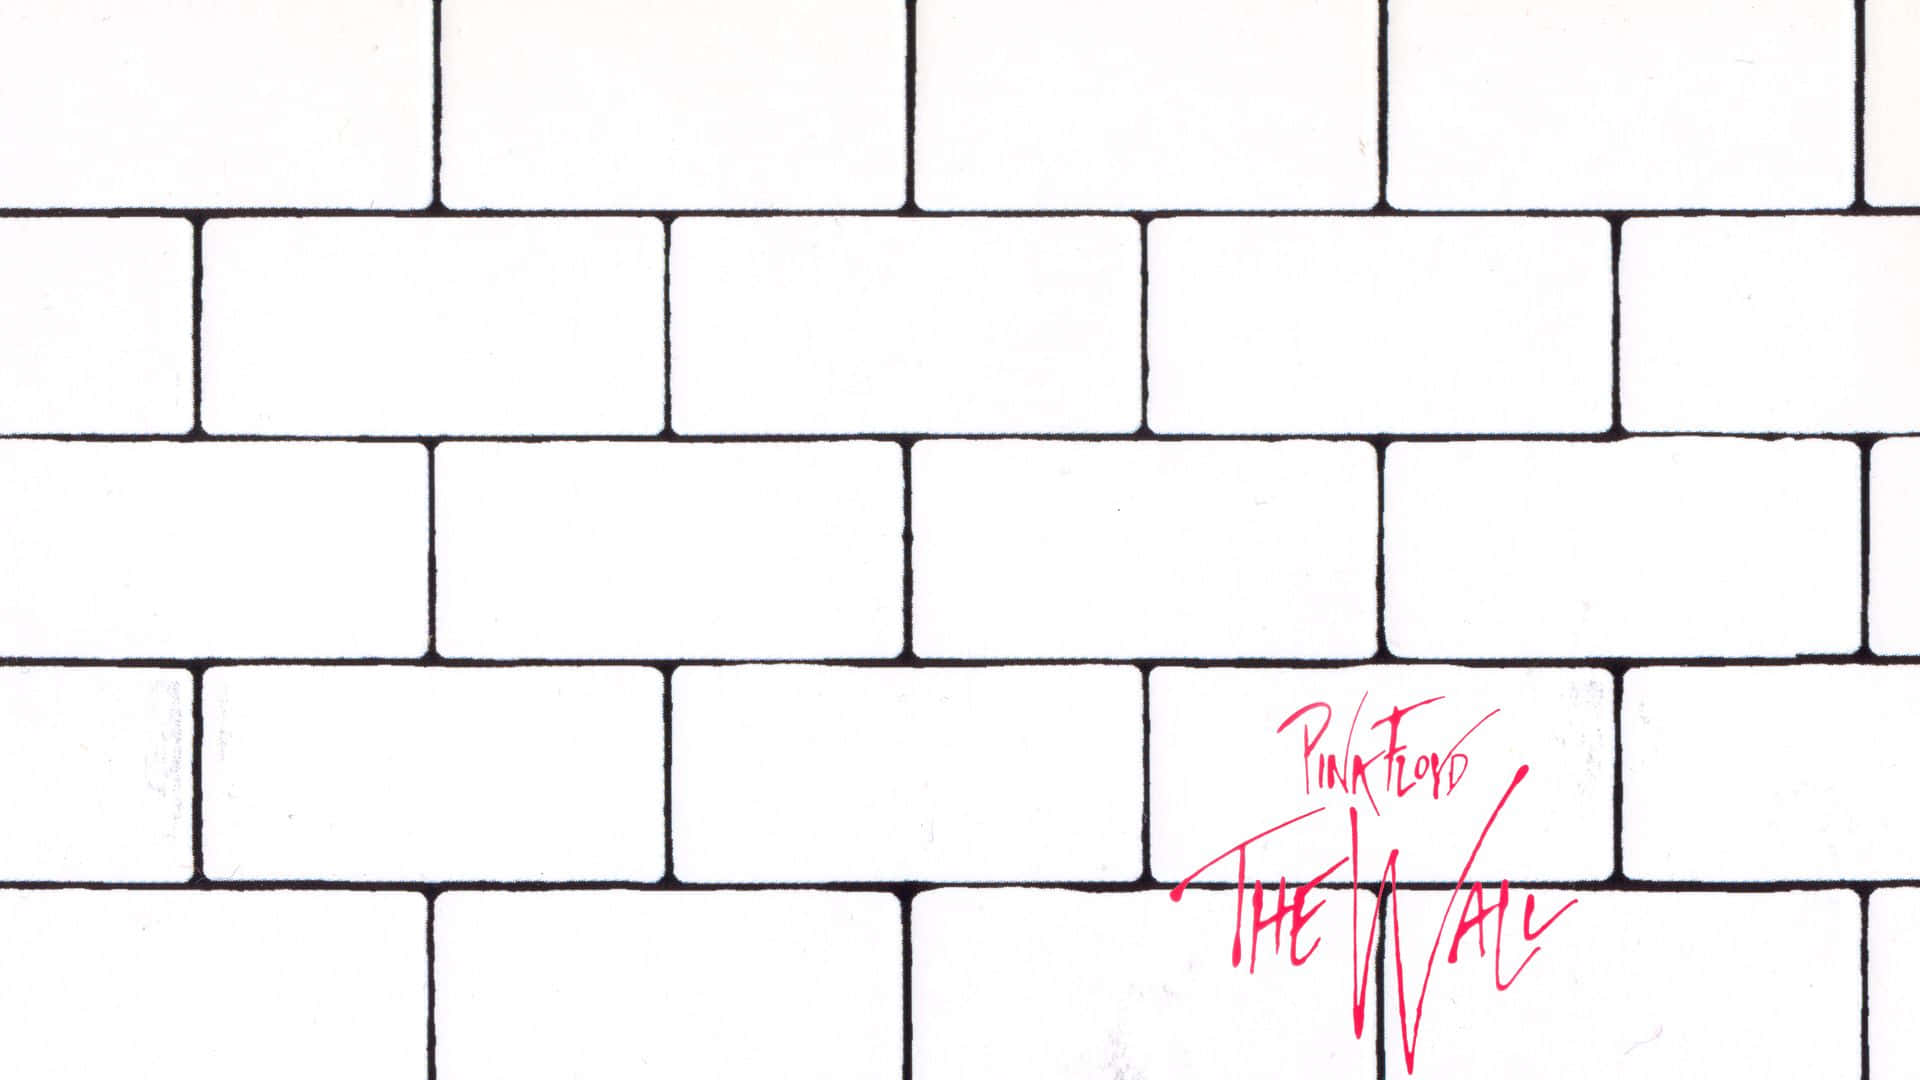 Pinkfloyd - Il Muro Sfondo